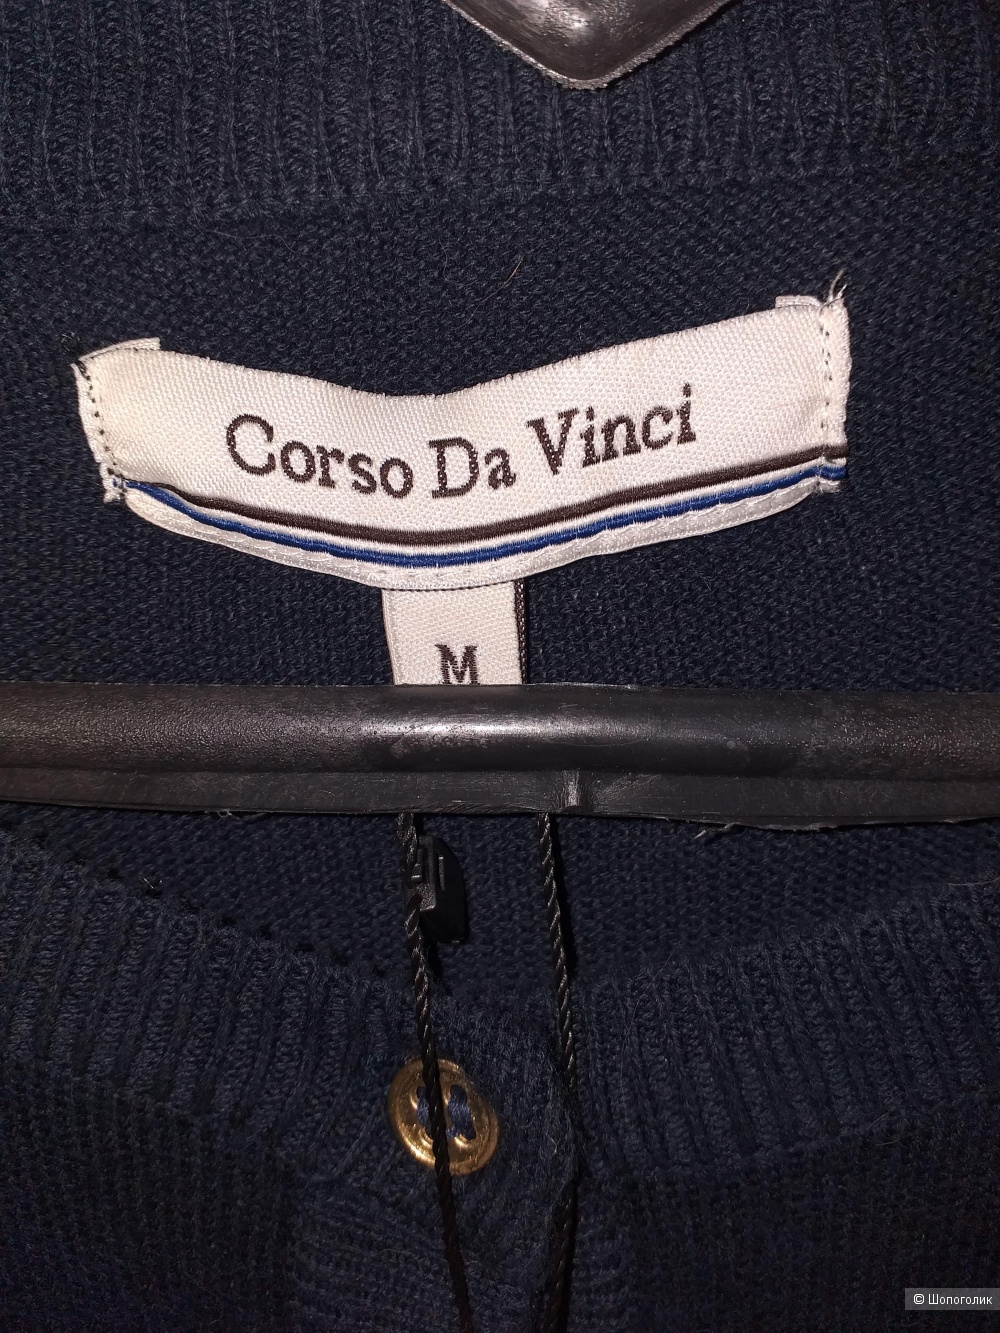 Кардиган Corso Da Vinci. М, 46 р